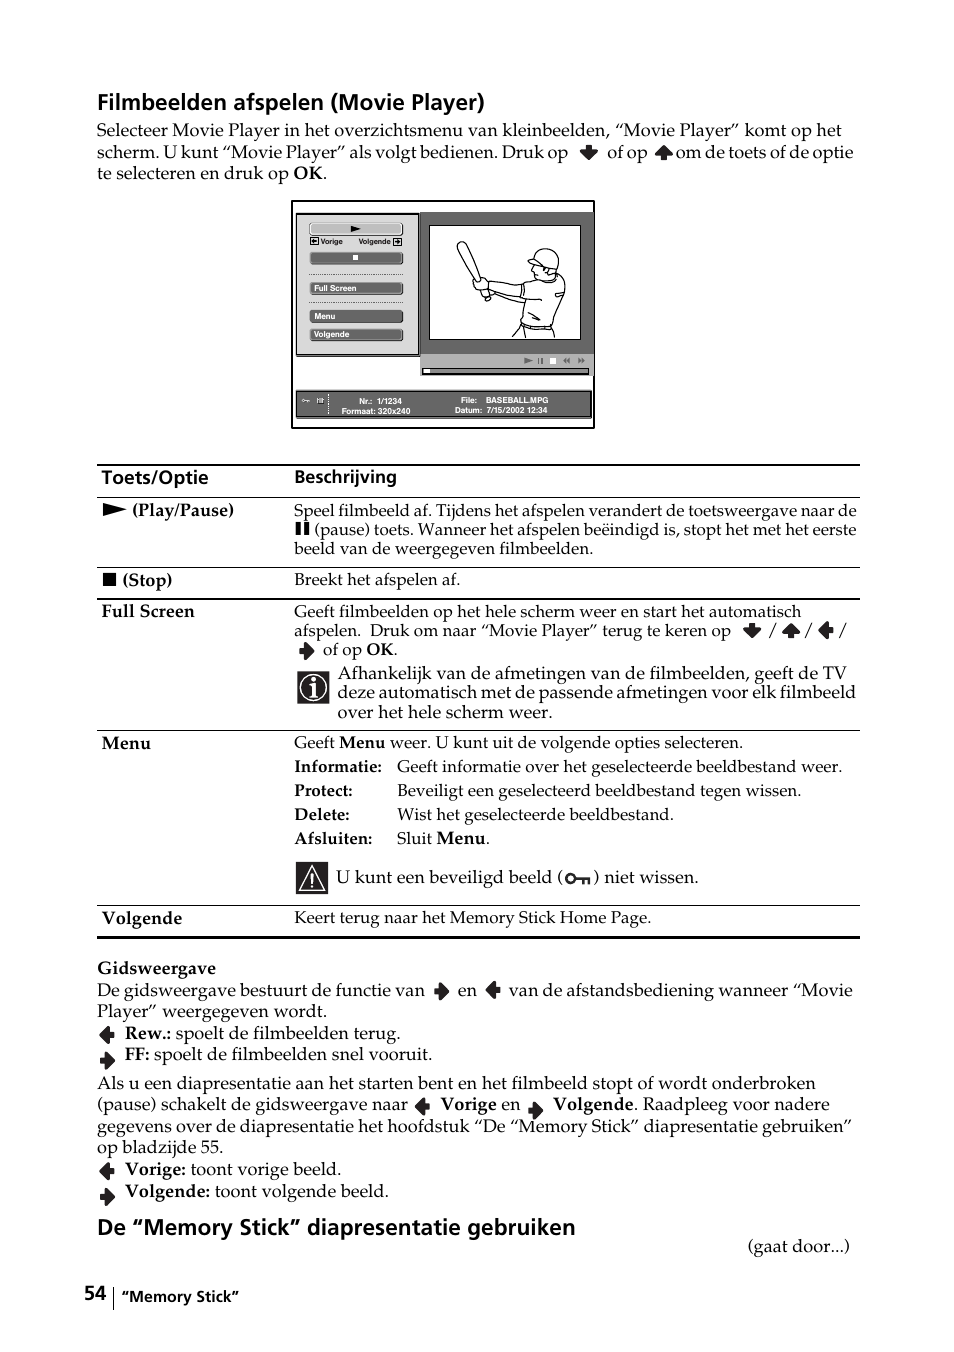 Filmbeelden afspelen (movie player) | Sony KE-42MR1 Manuale d'uso | Pagina 130 / 302